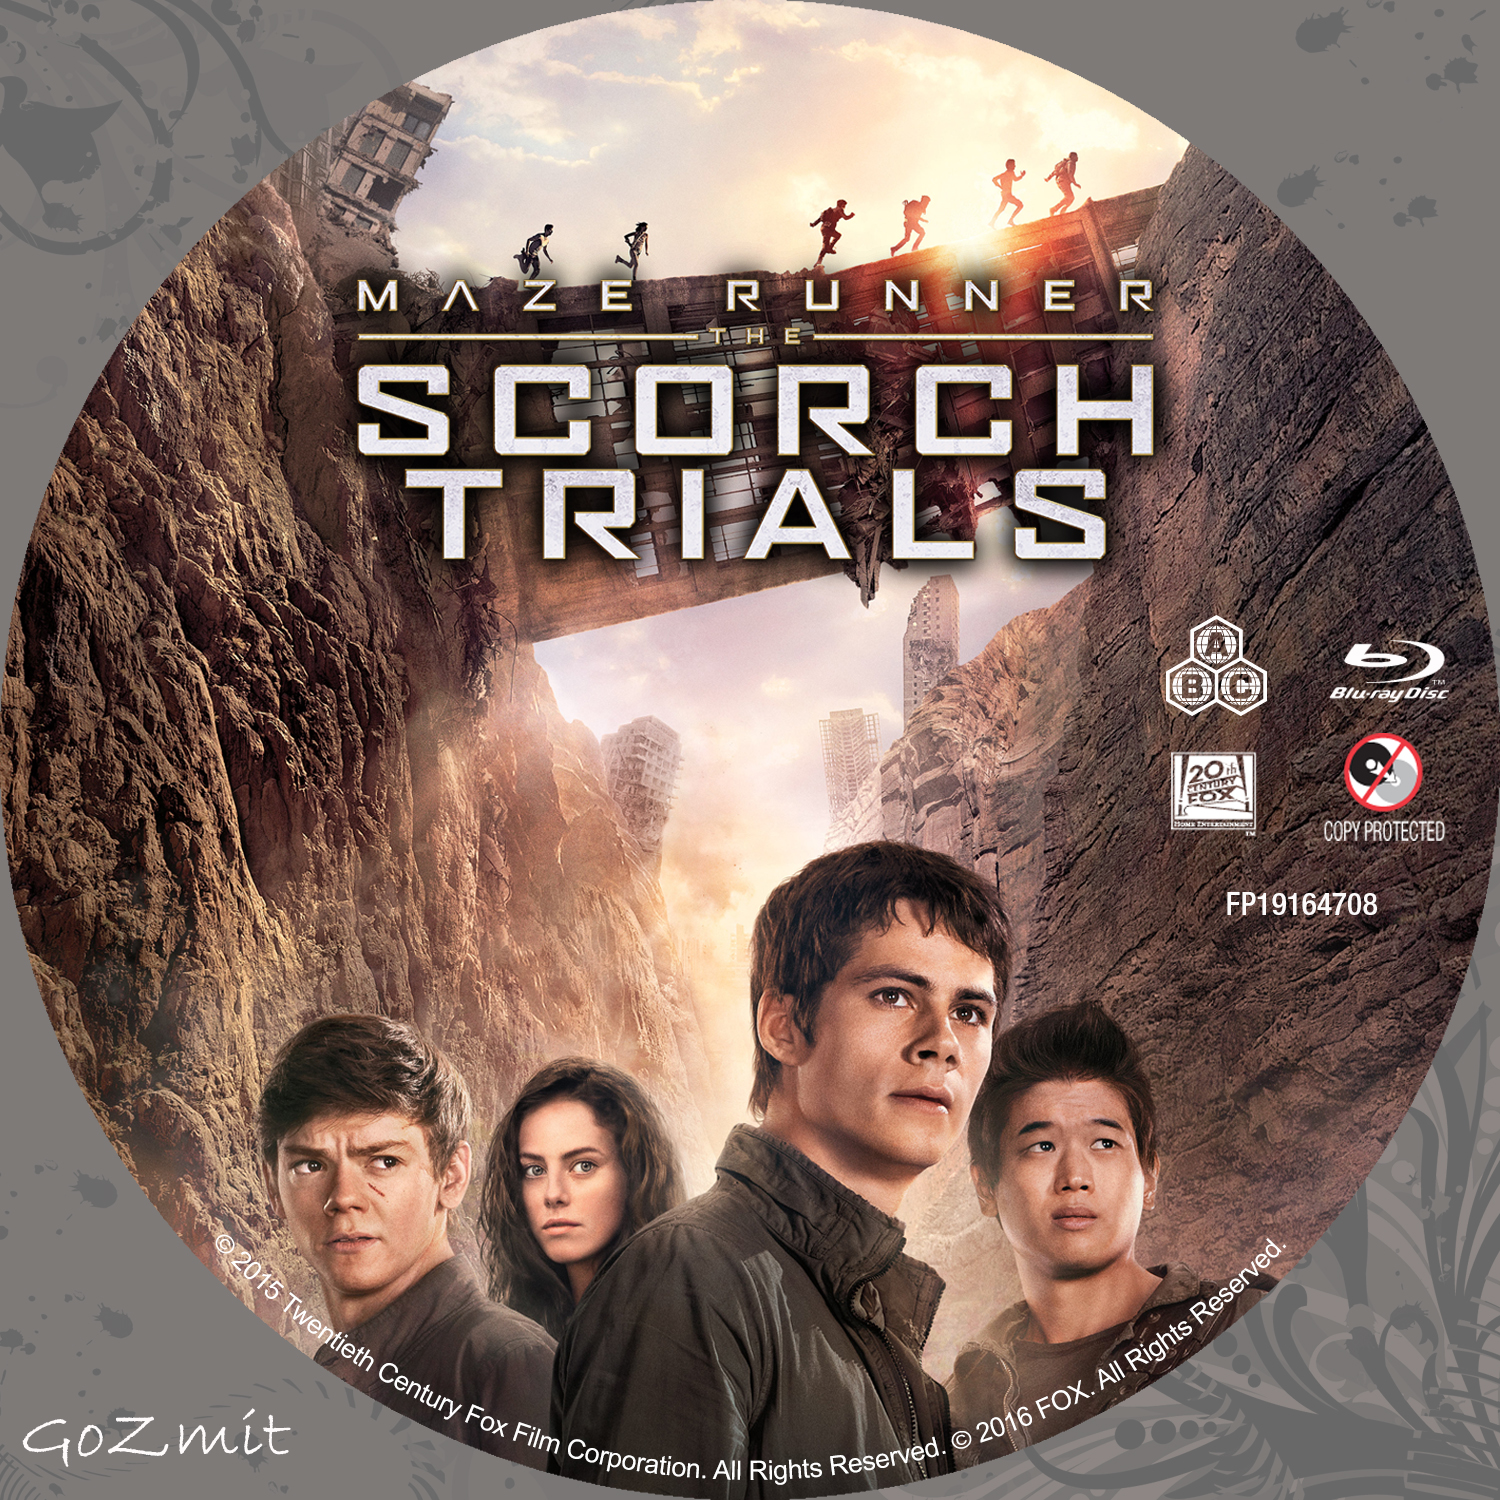 Maze Runner: The Scorch Trials Blue Ray + DVD